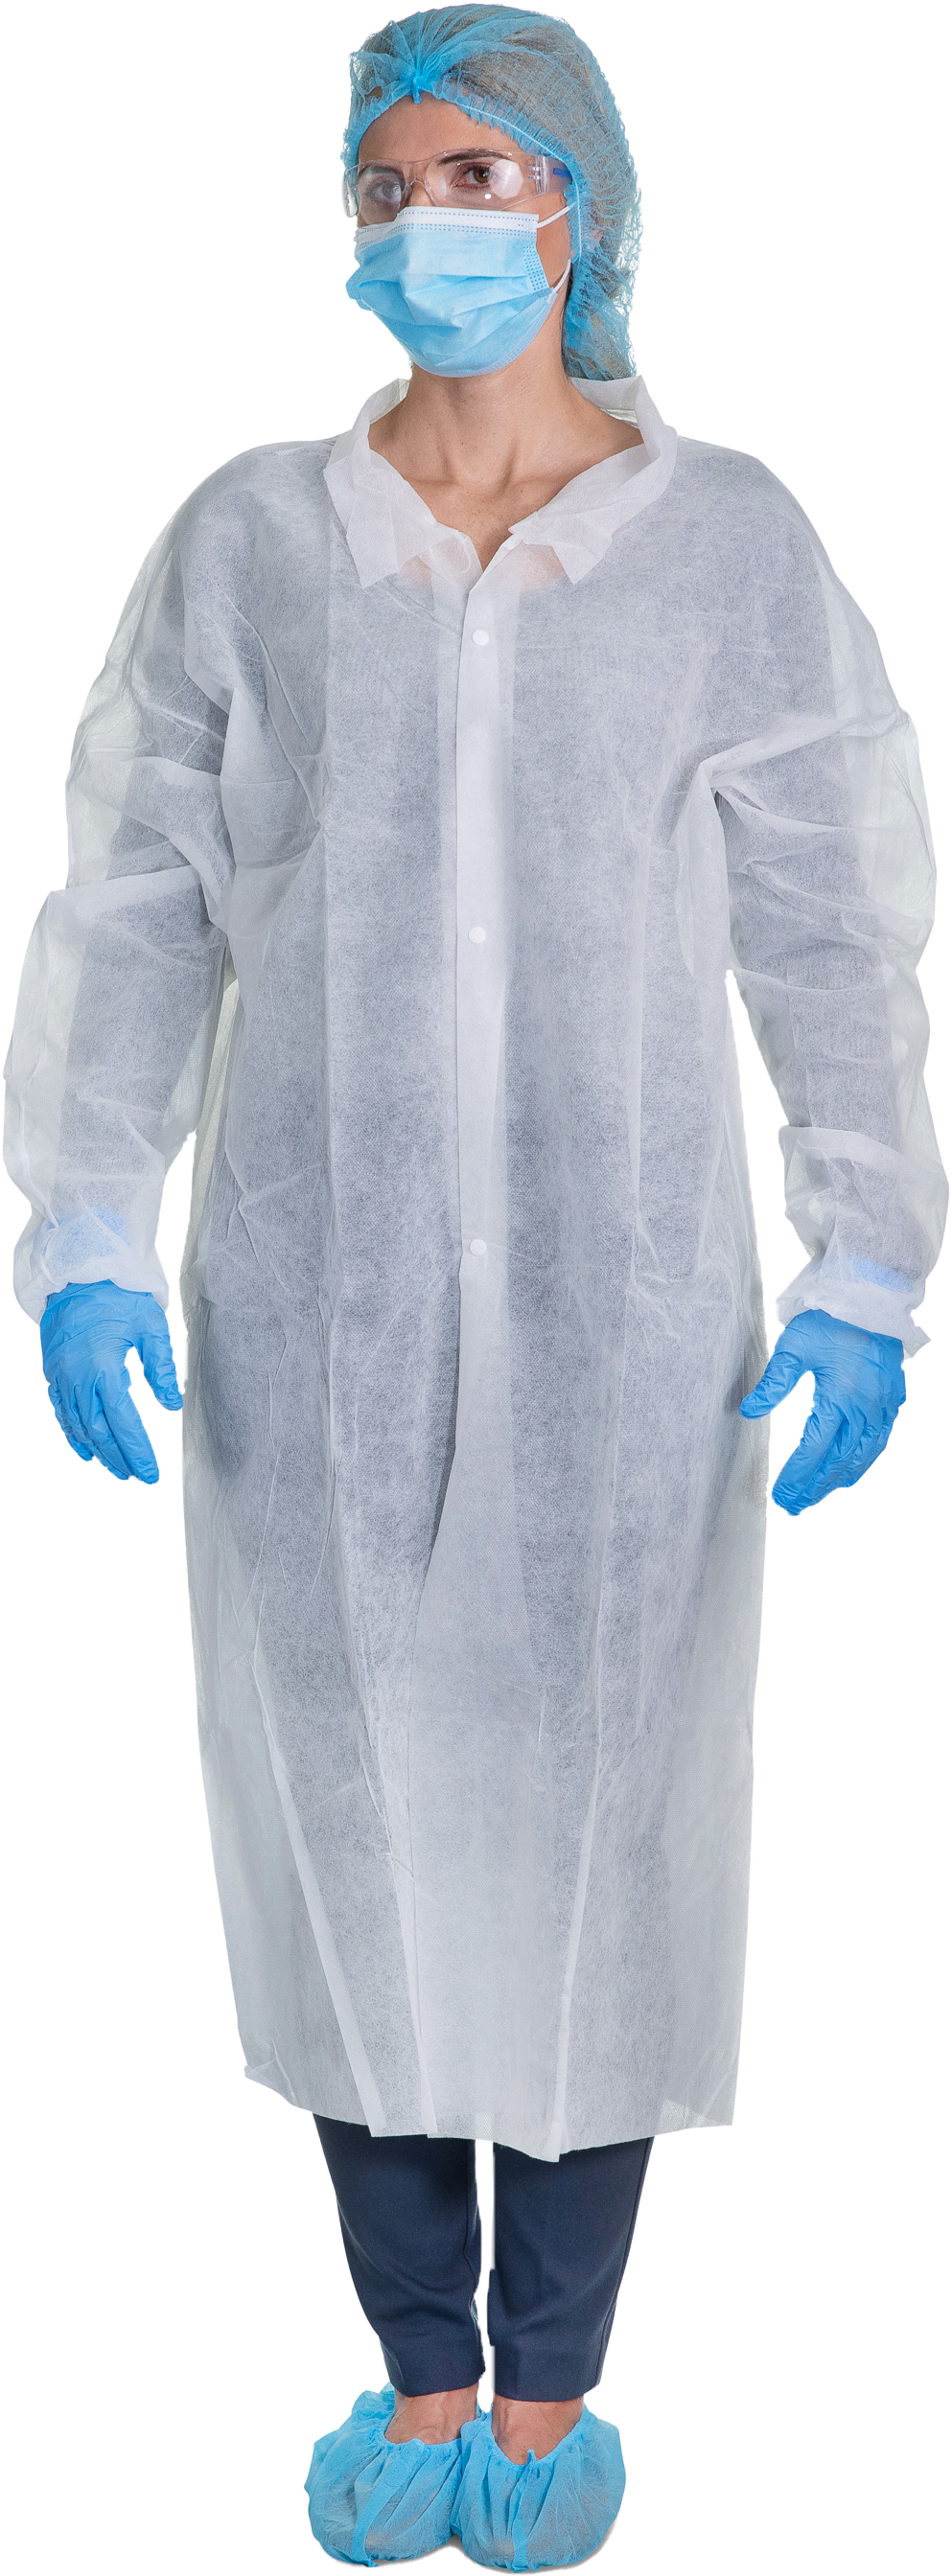 Lab coat on woman